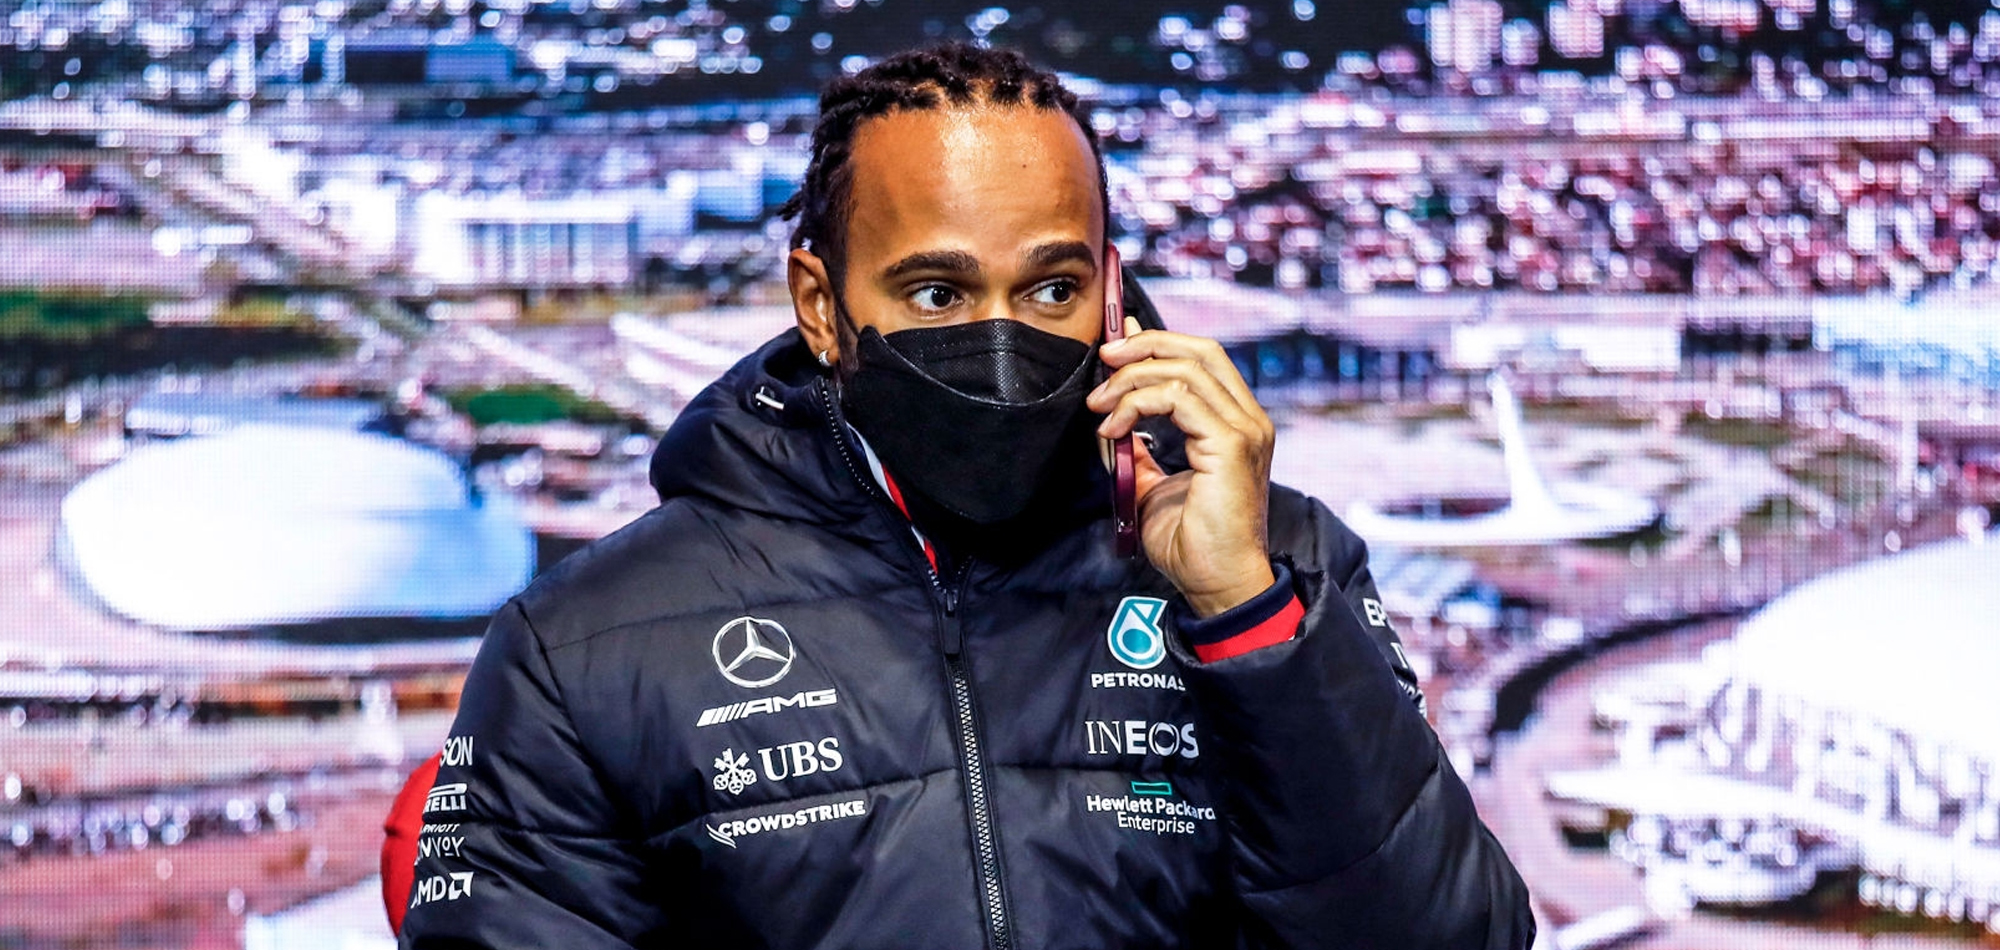 Hamilton, Verstappen renew bruising F1 title fight in Russia